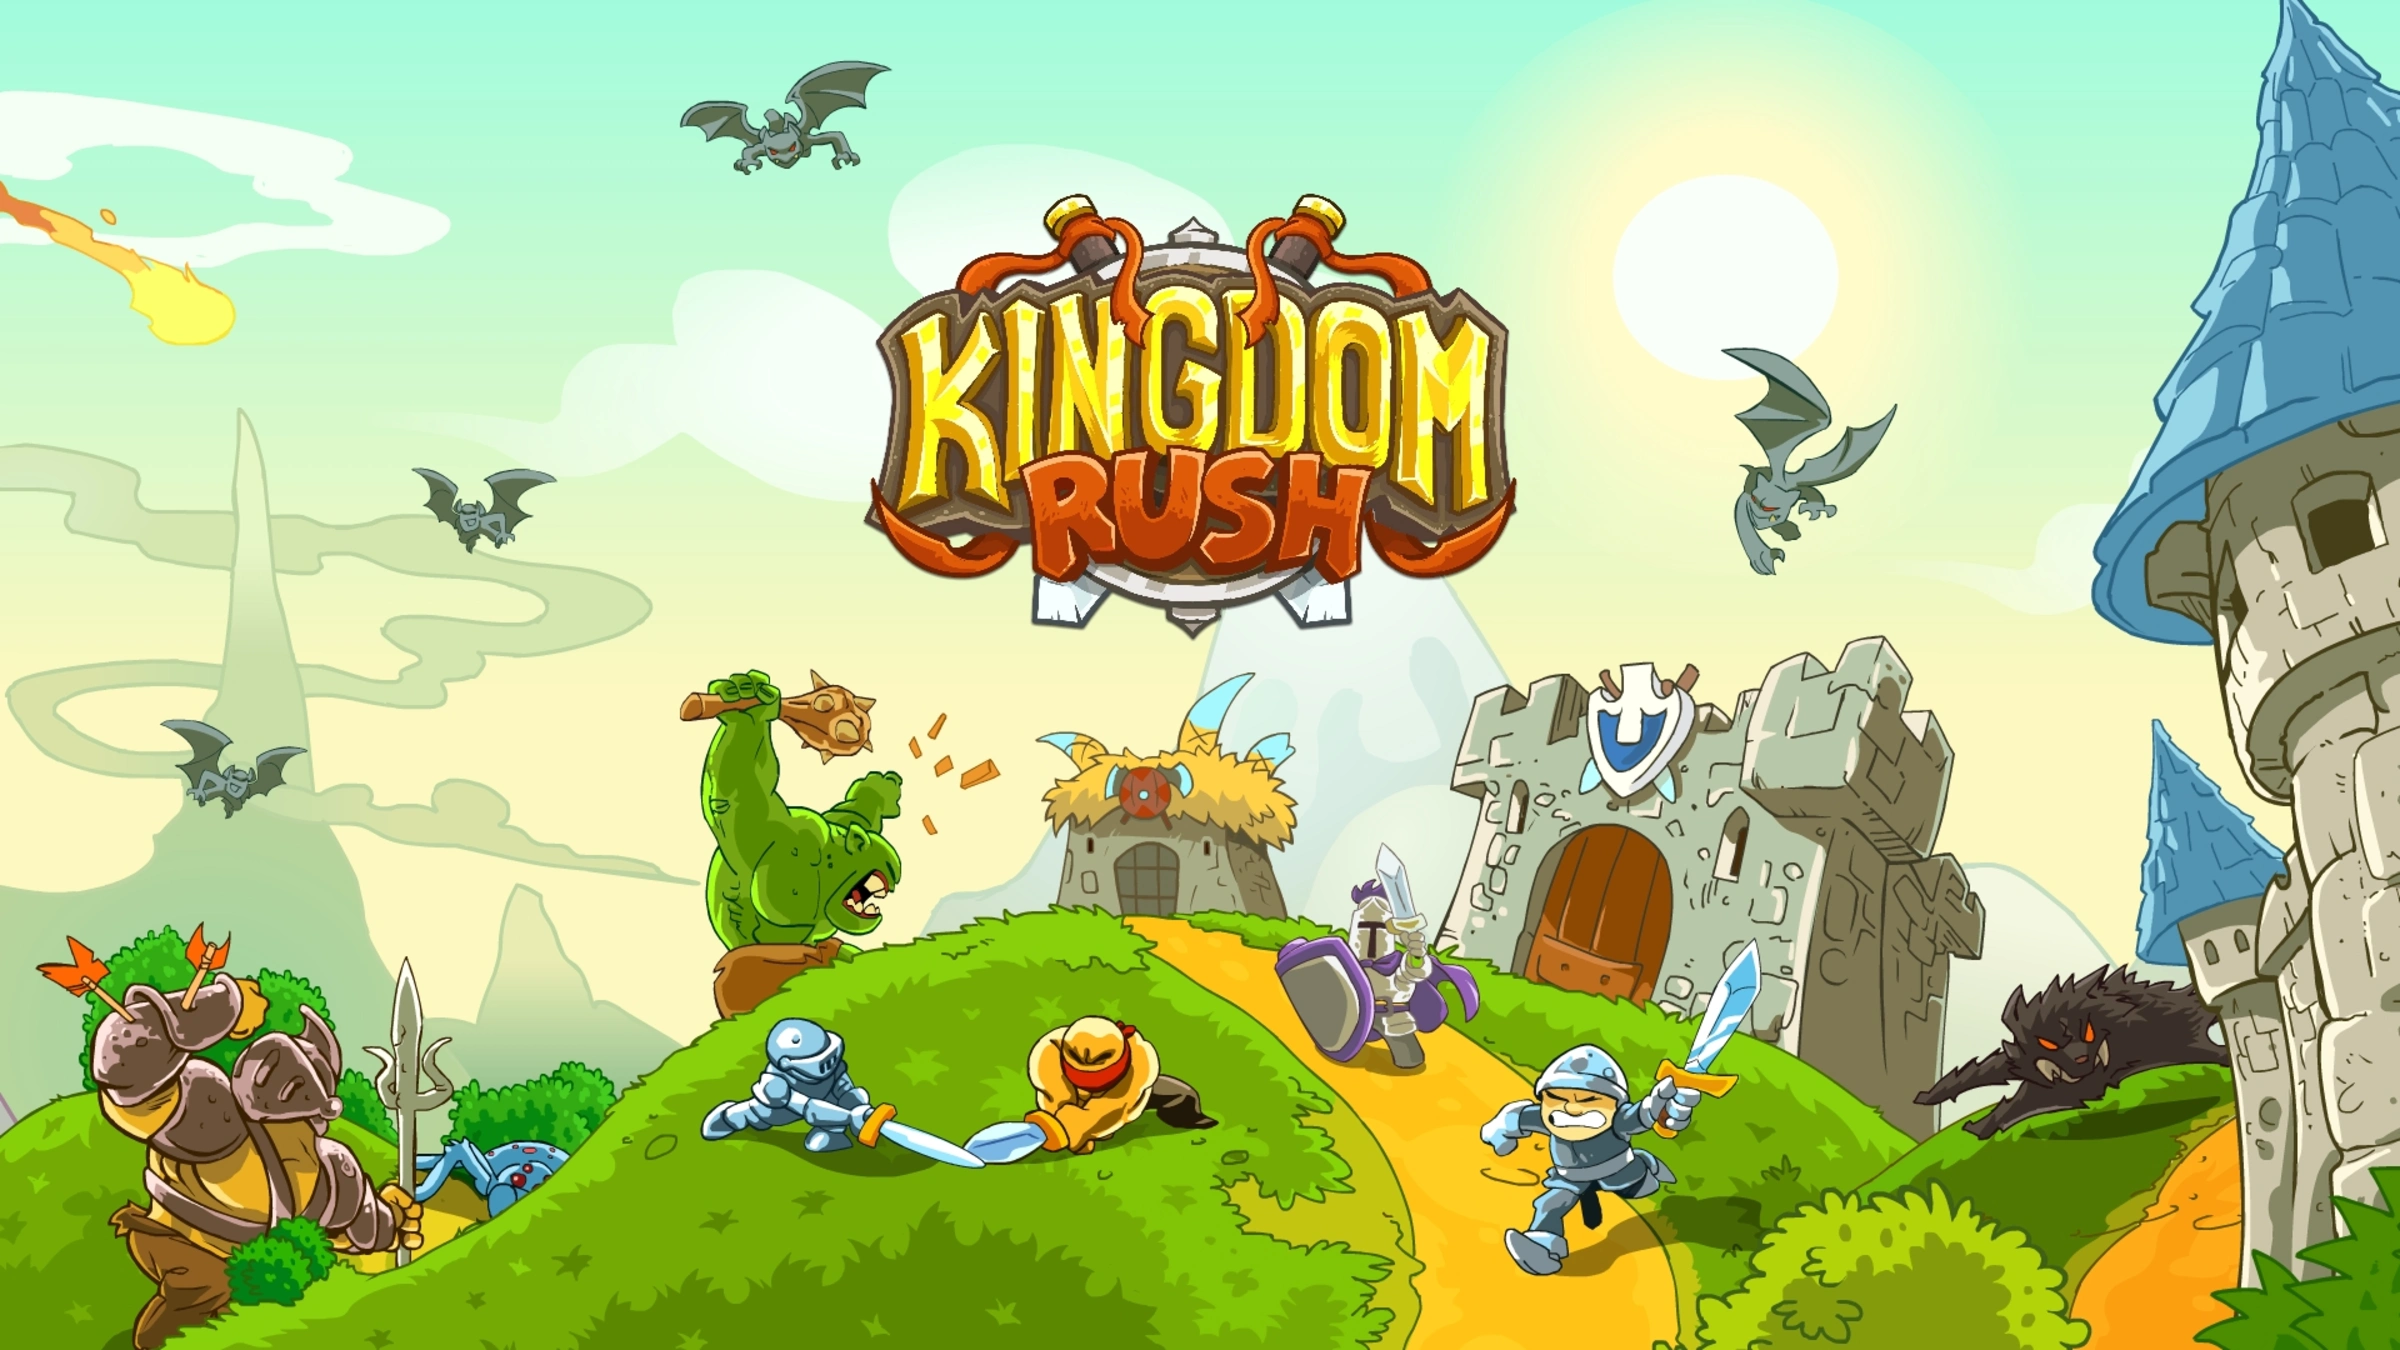 Включи игра башни. Игра Kingdom Rush 1 башни. Карта игры Kingdom Rush. Огненная яма Kingdom Rush. Kingdom Rush Vengeance башни.